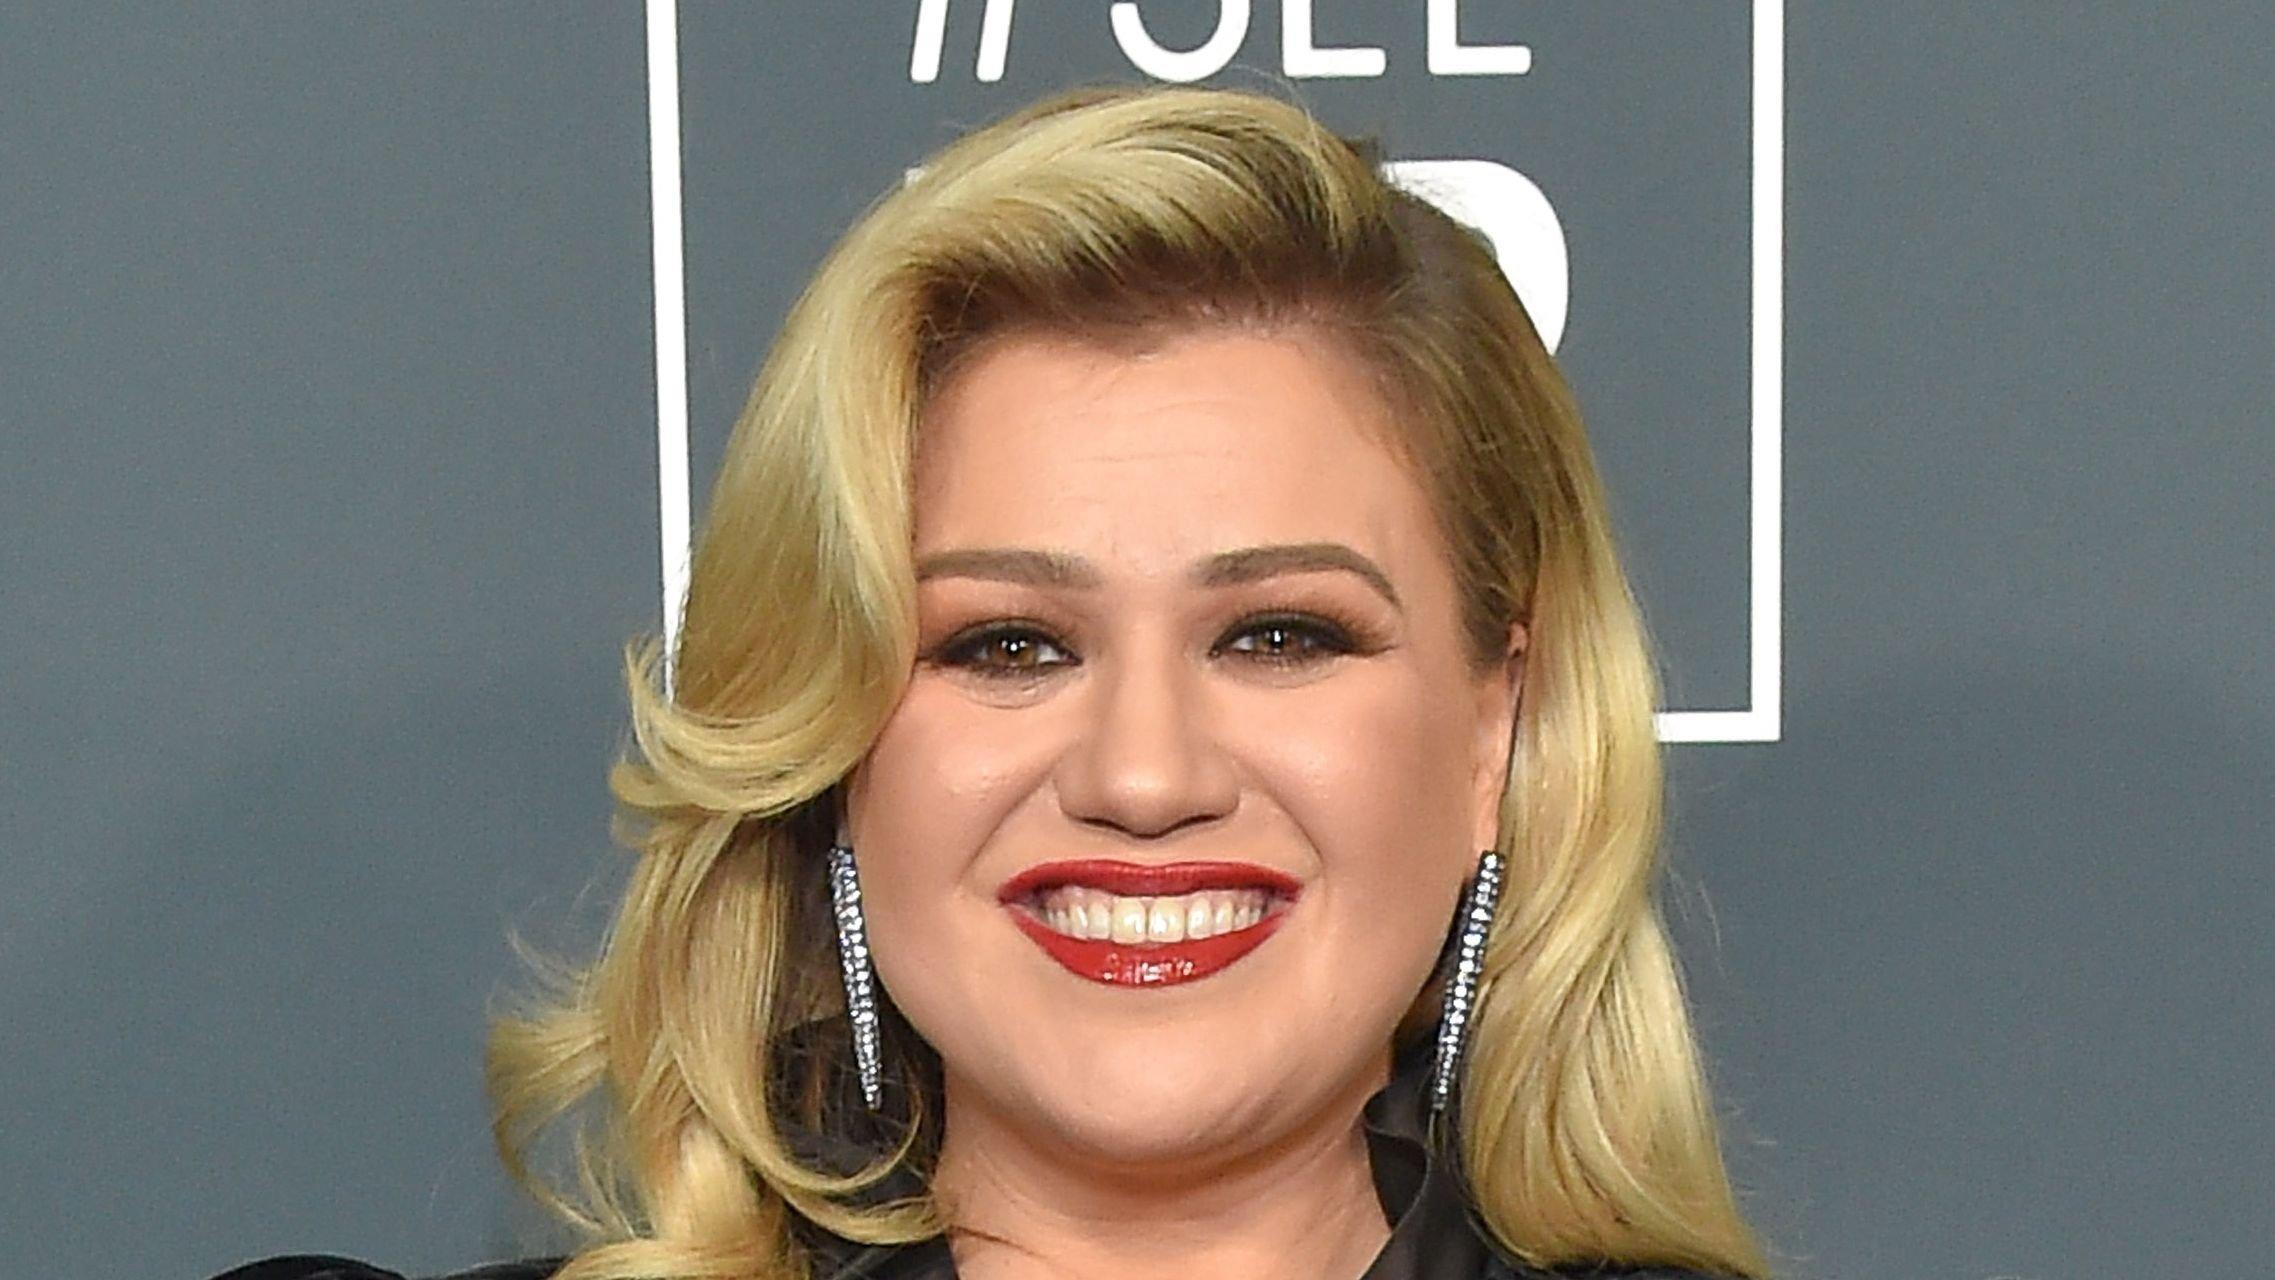 Award-winning singer Kelly Clarkson